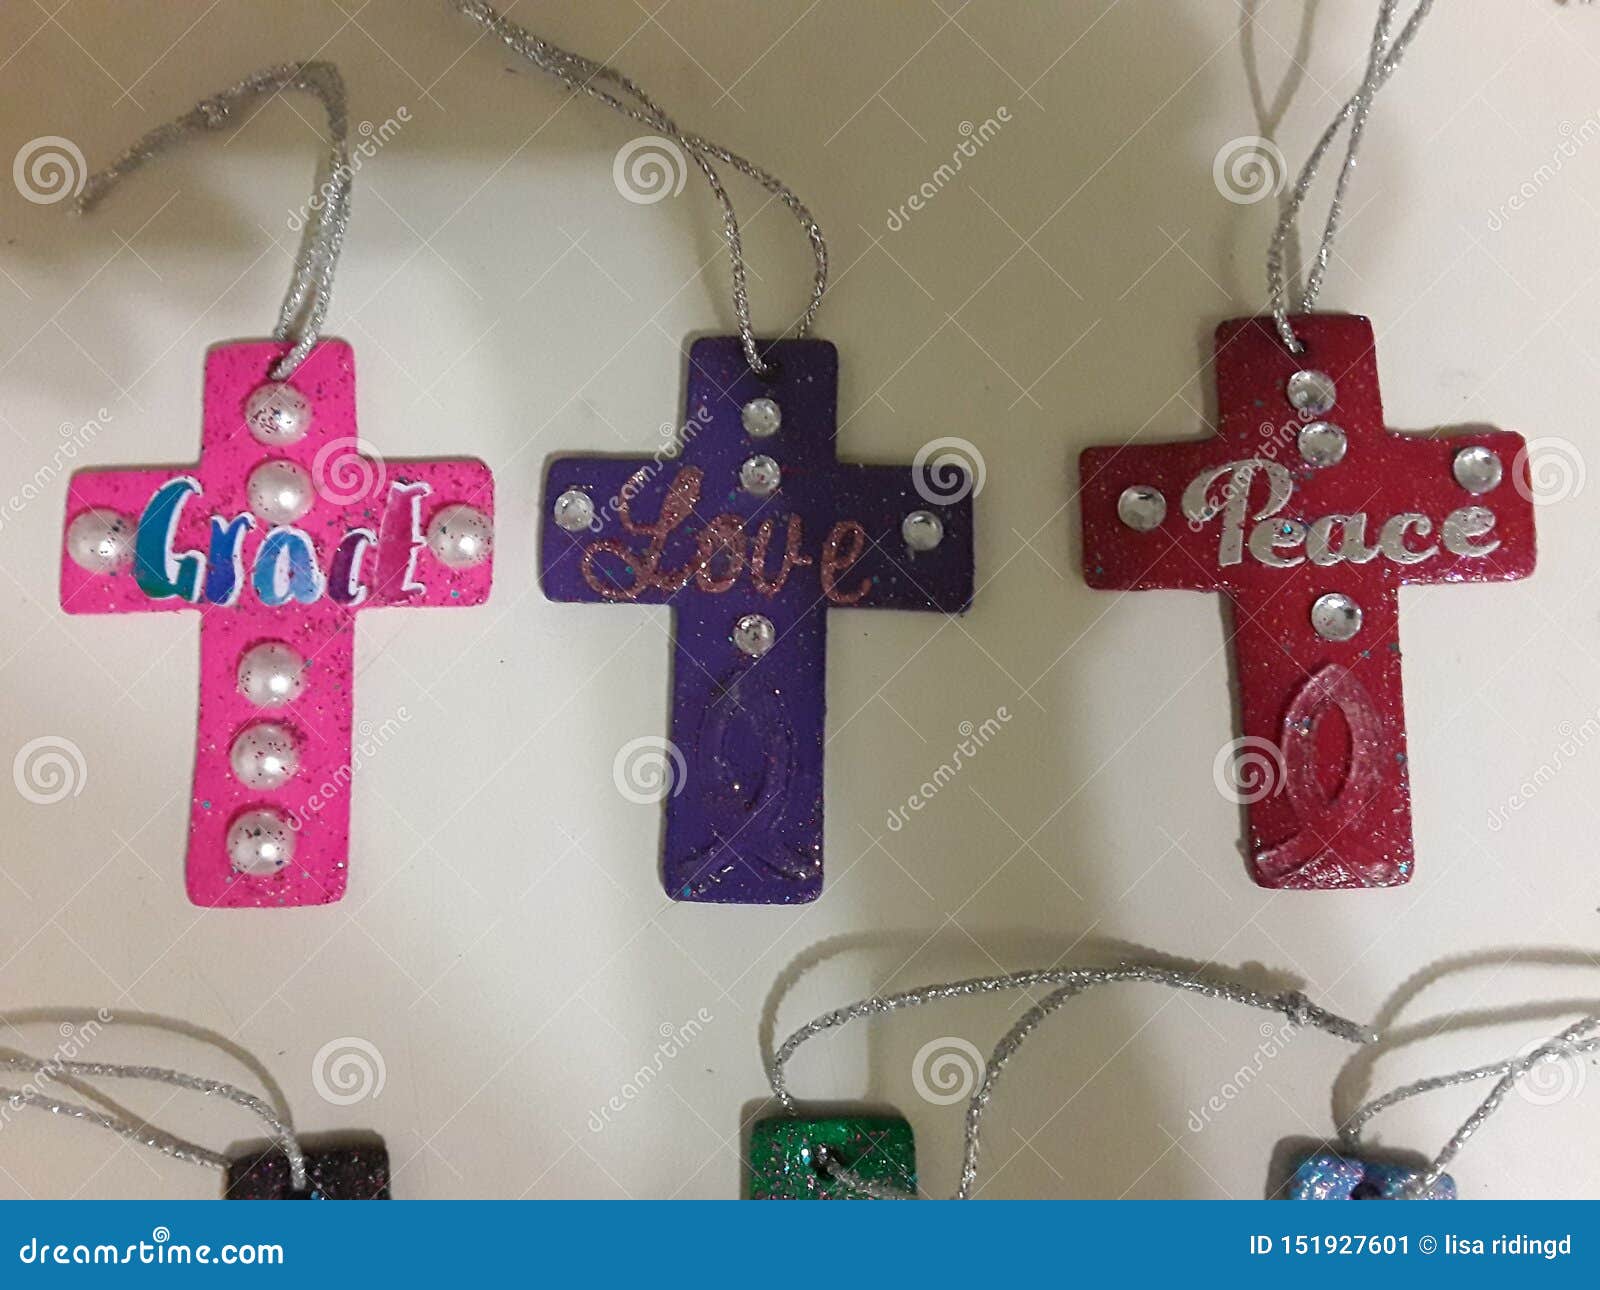 Handmade crosses stock image. Image of handmade, sale - 151927601